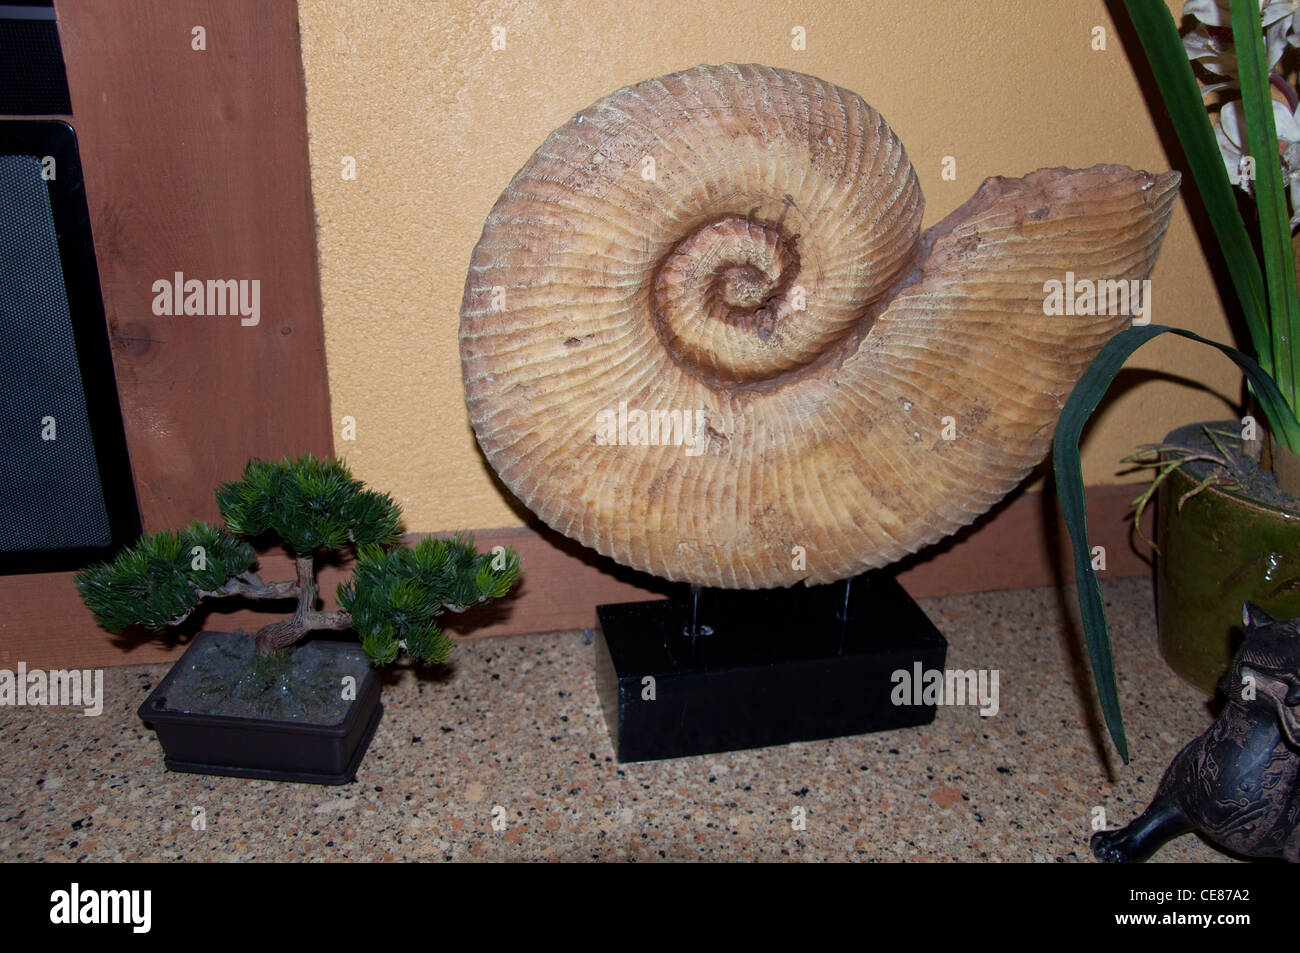 Shell and bonsai home design Stock Photo